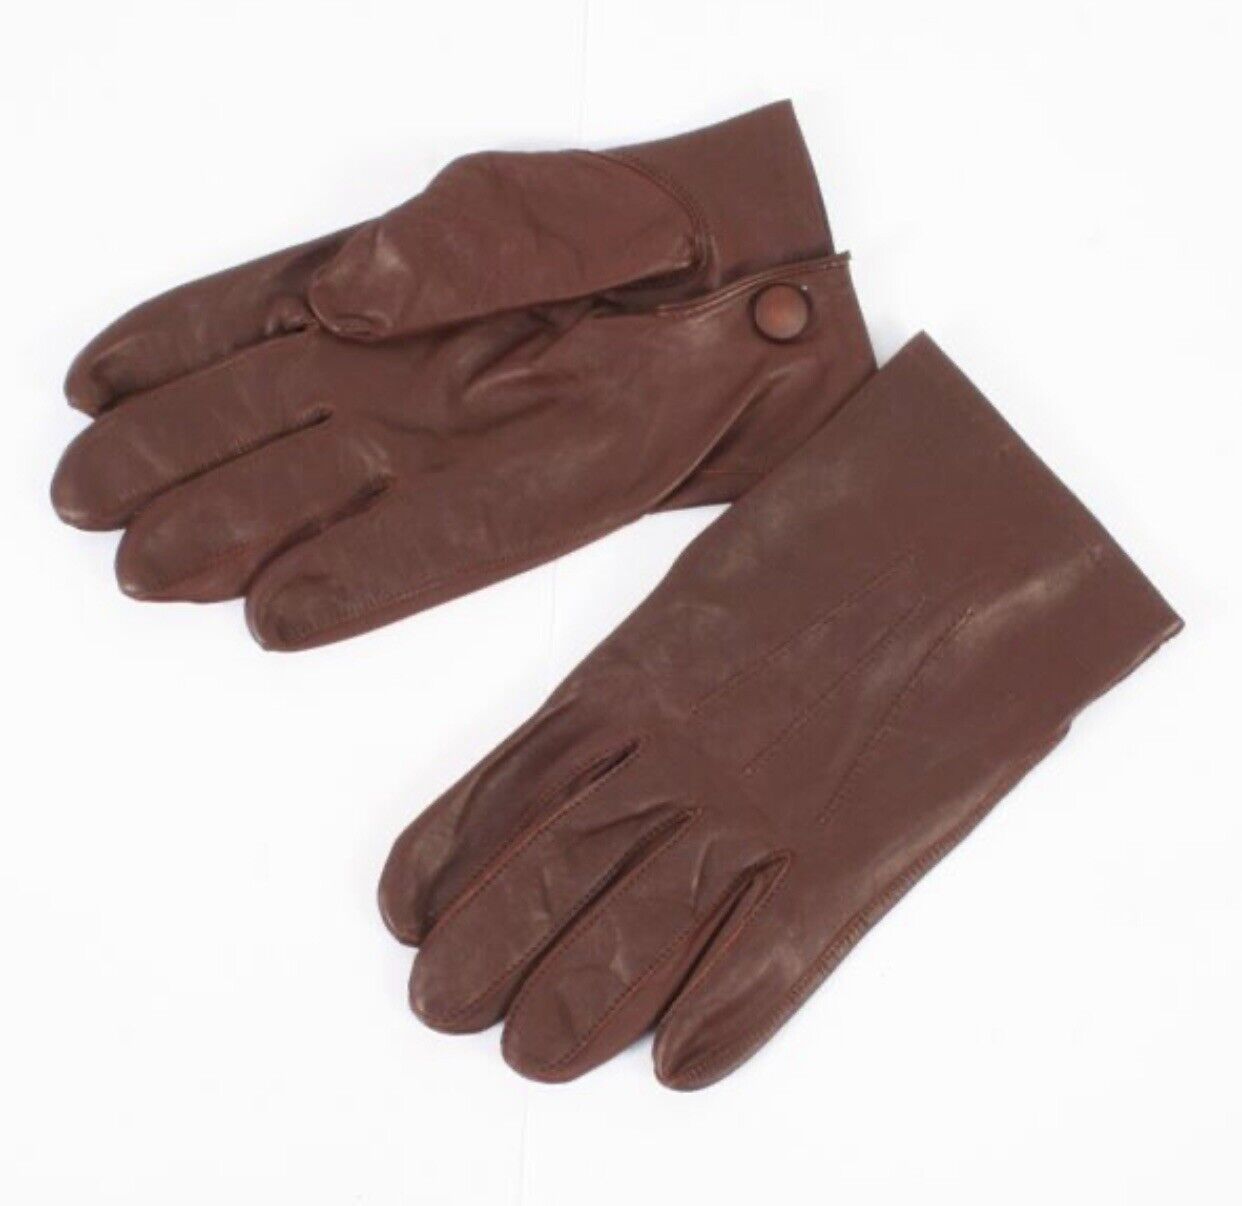 Very Rare Pre WW1 British Army Officer Dark Brown Leather Gloves 1900s